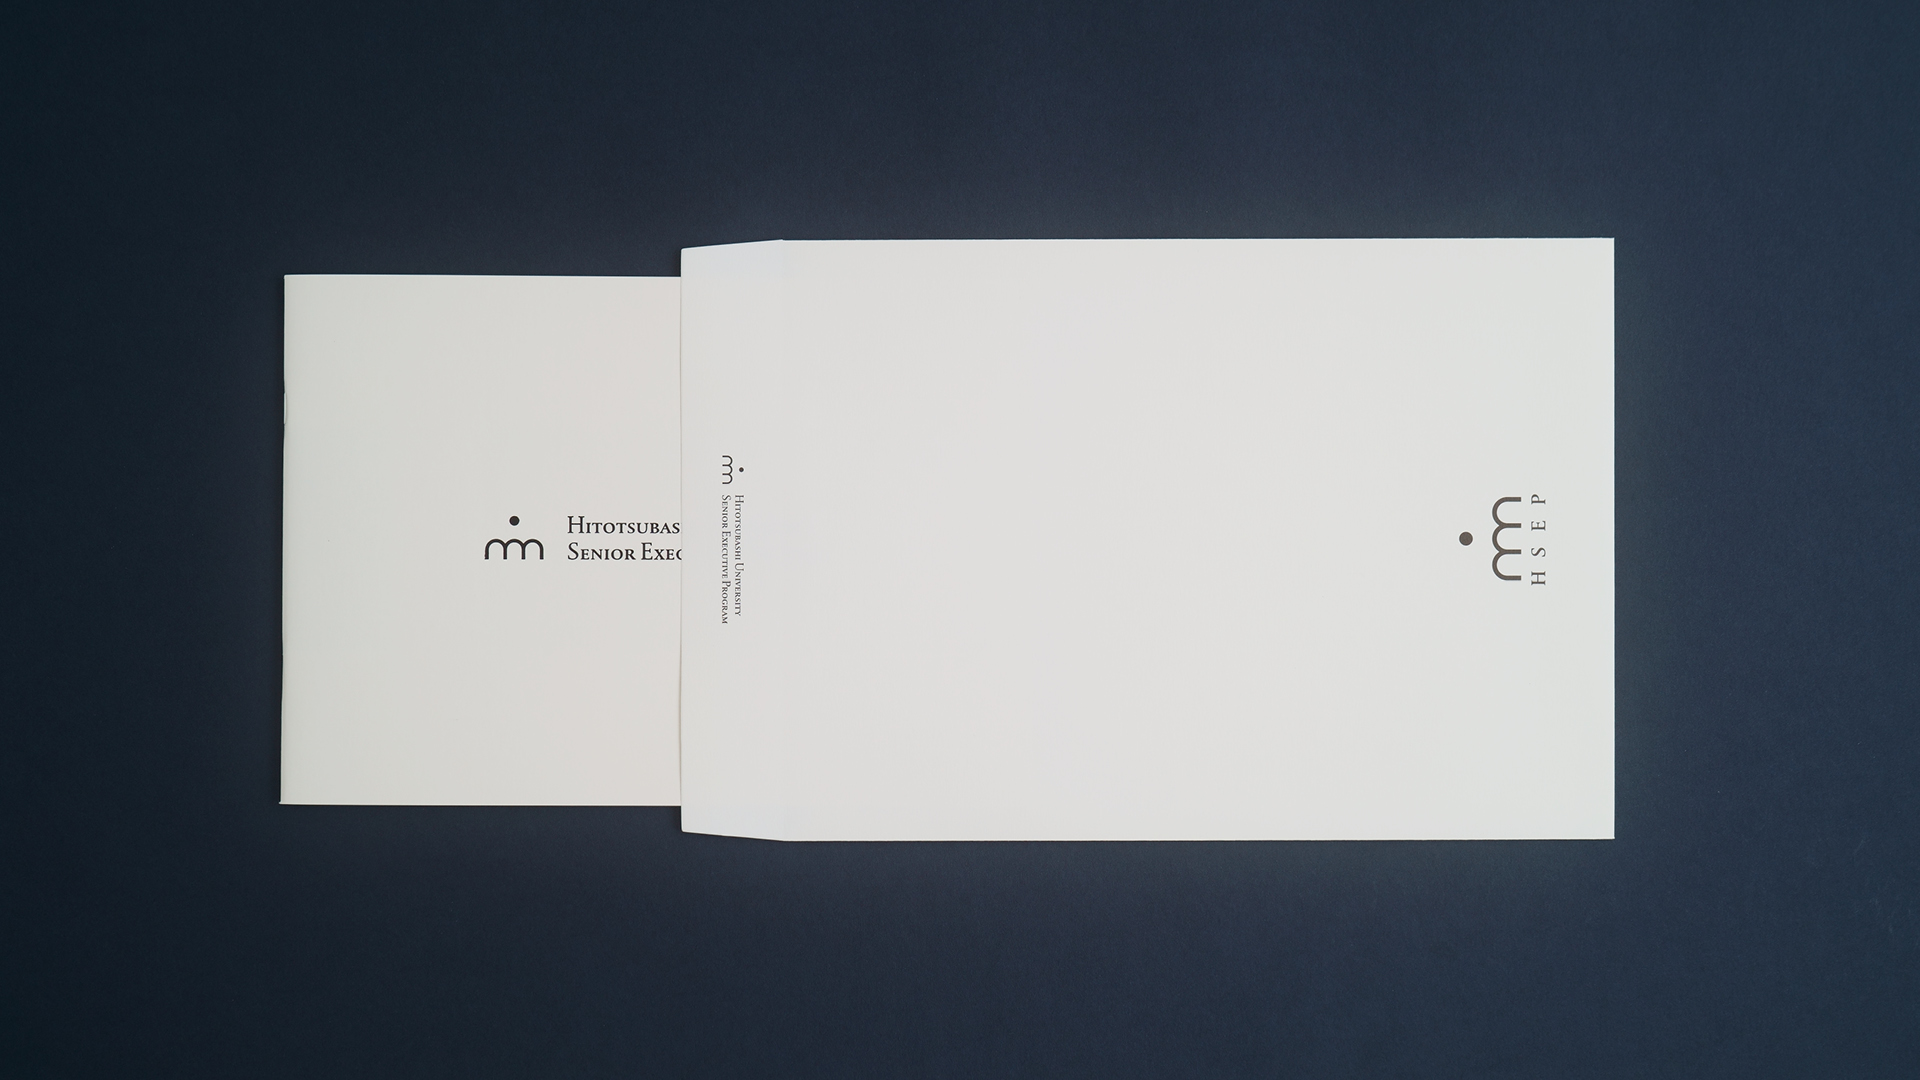 Hitotsubashi Senior Executive Program (HSEP)'s Brochure and Envelopes